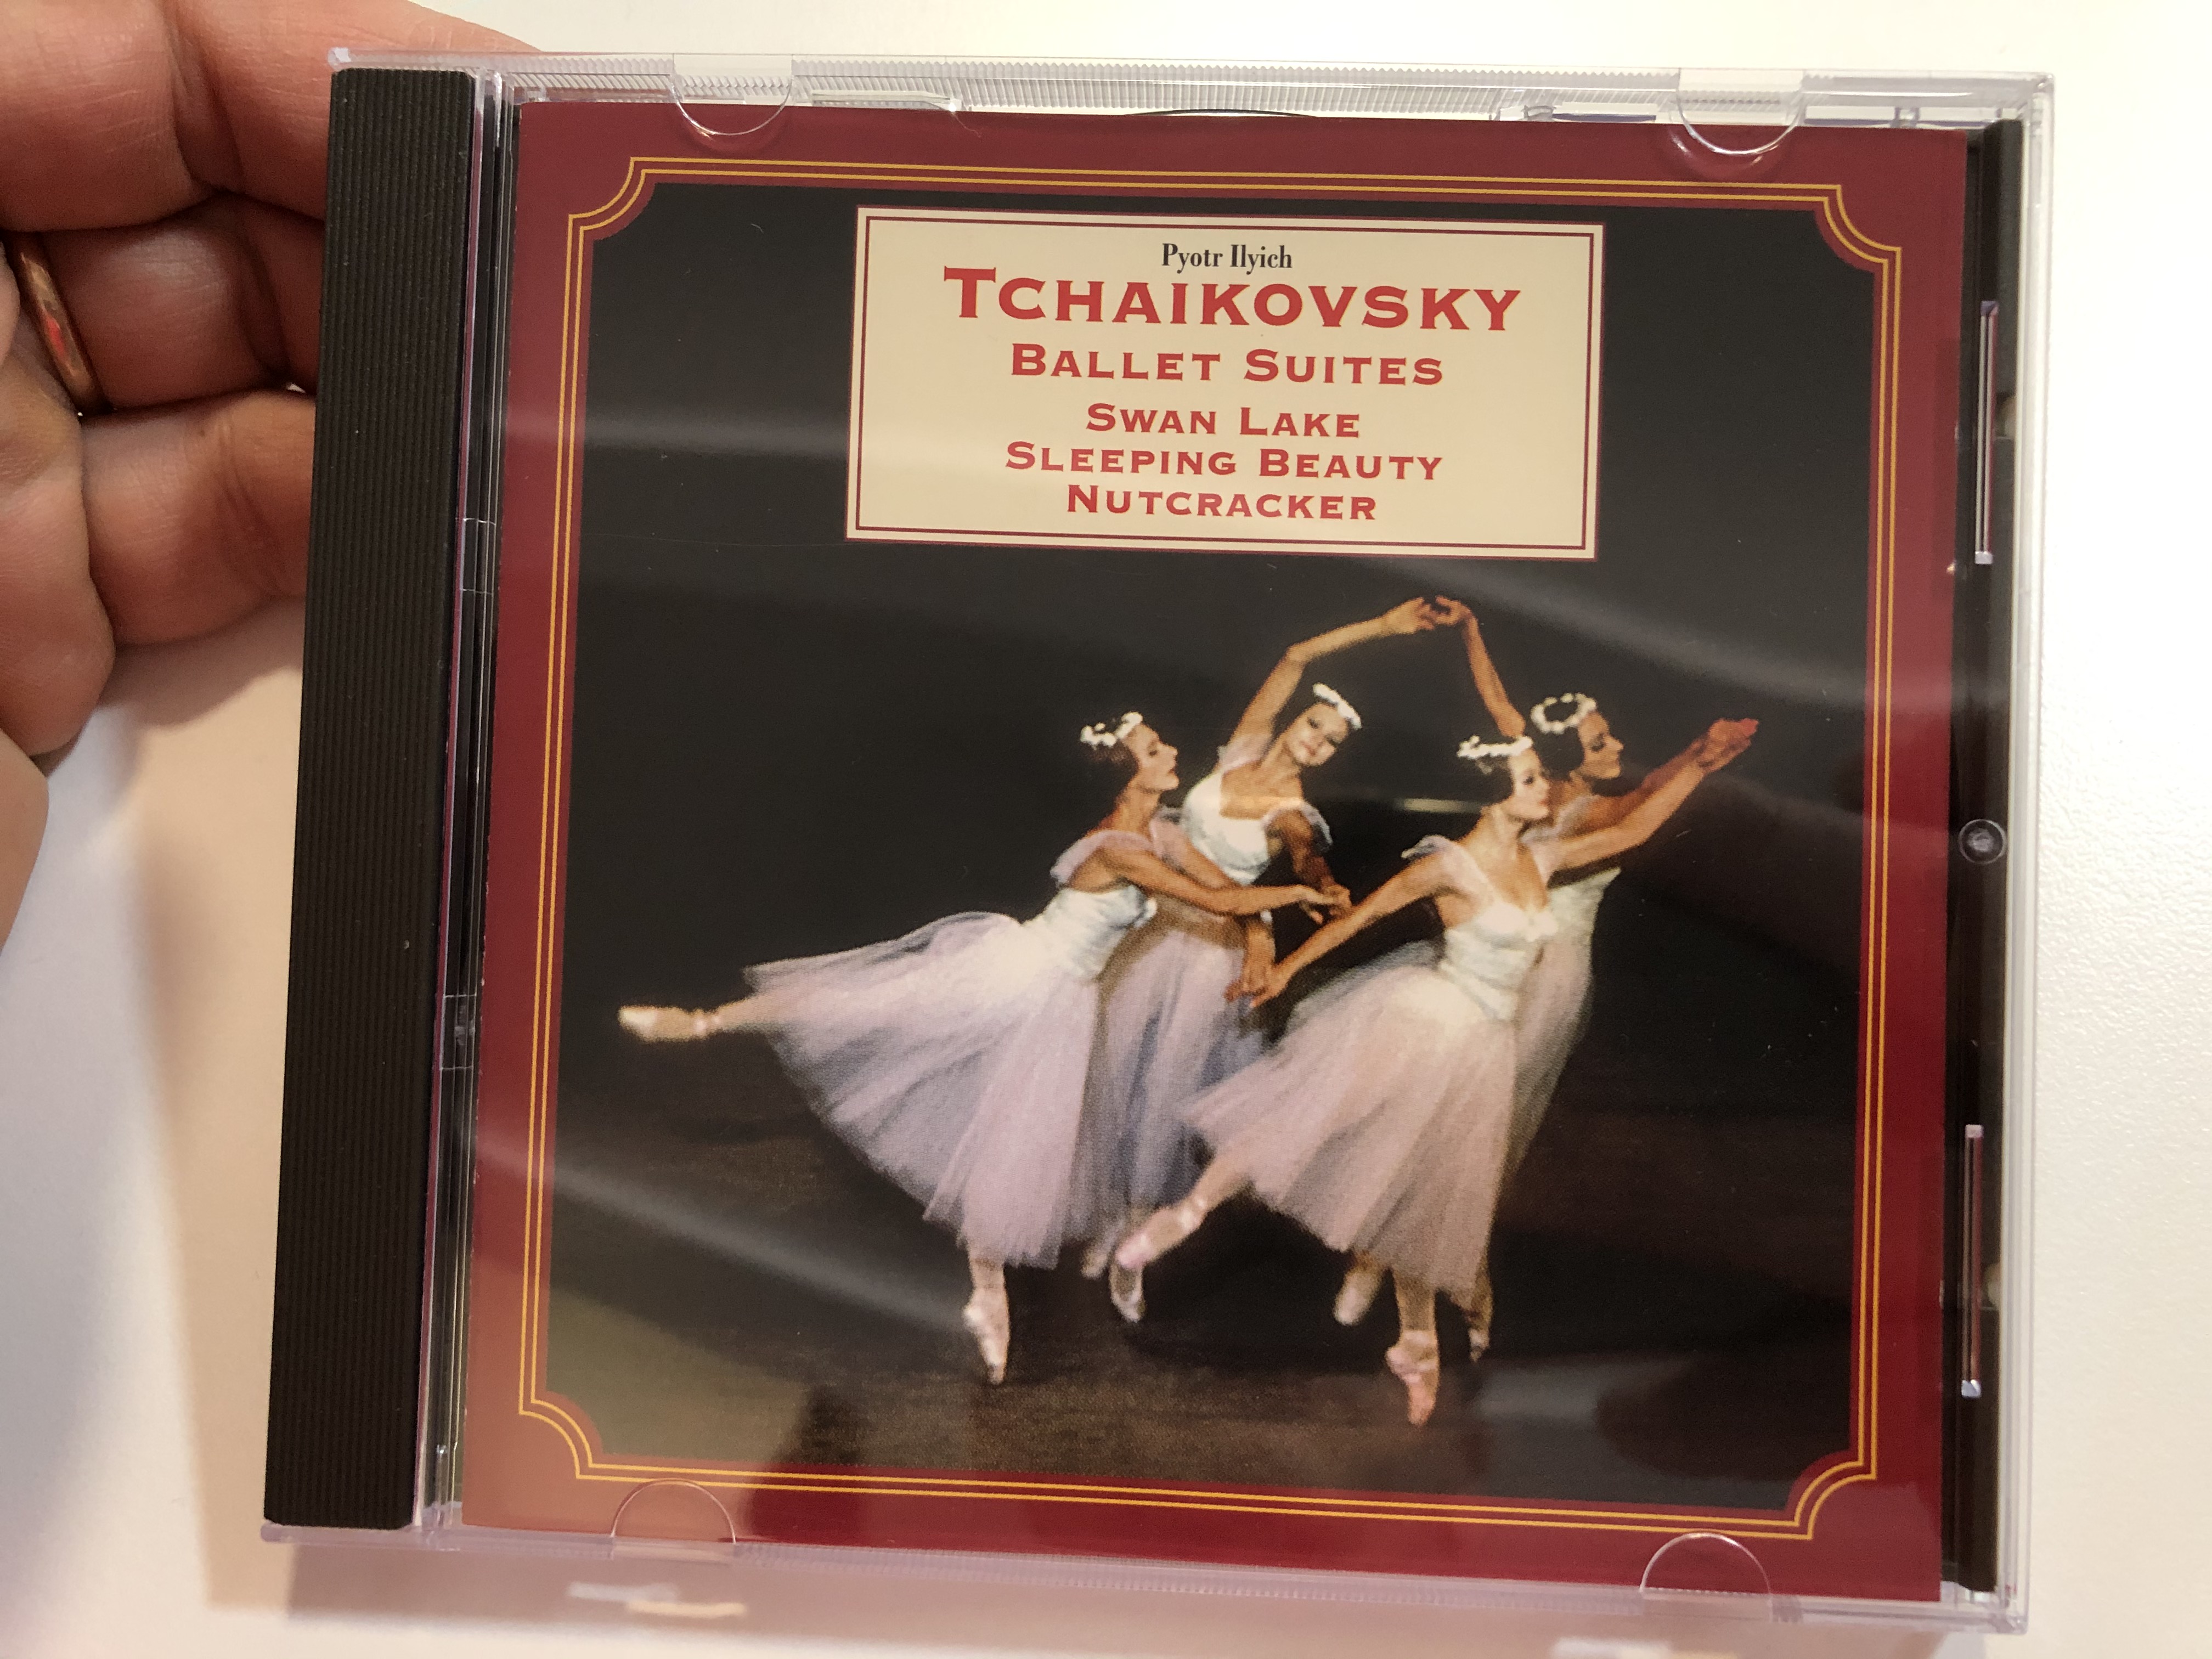 pyotr-ilyich-tchaikovsky-ballet-suites-swan-lake-sleeping-beauty-nutcracker-autograph-audio-cd-1997-mac-cd-928-1-.jpg